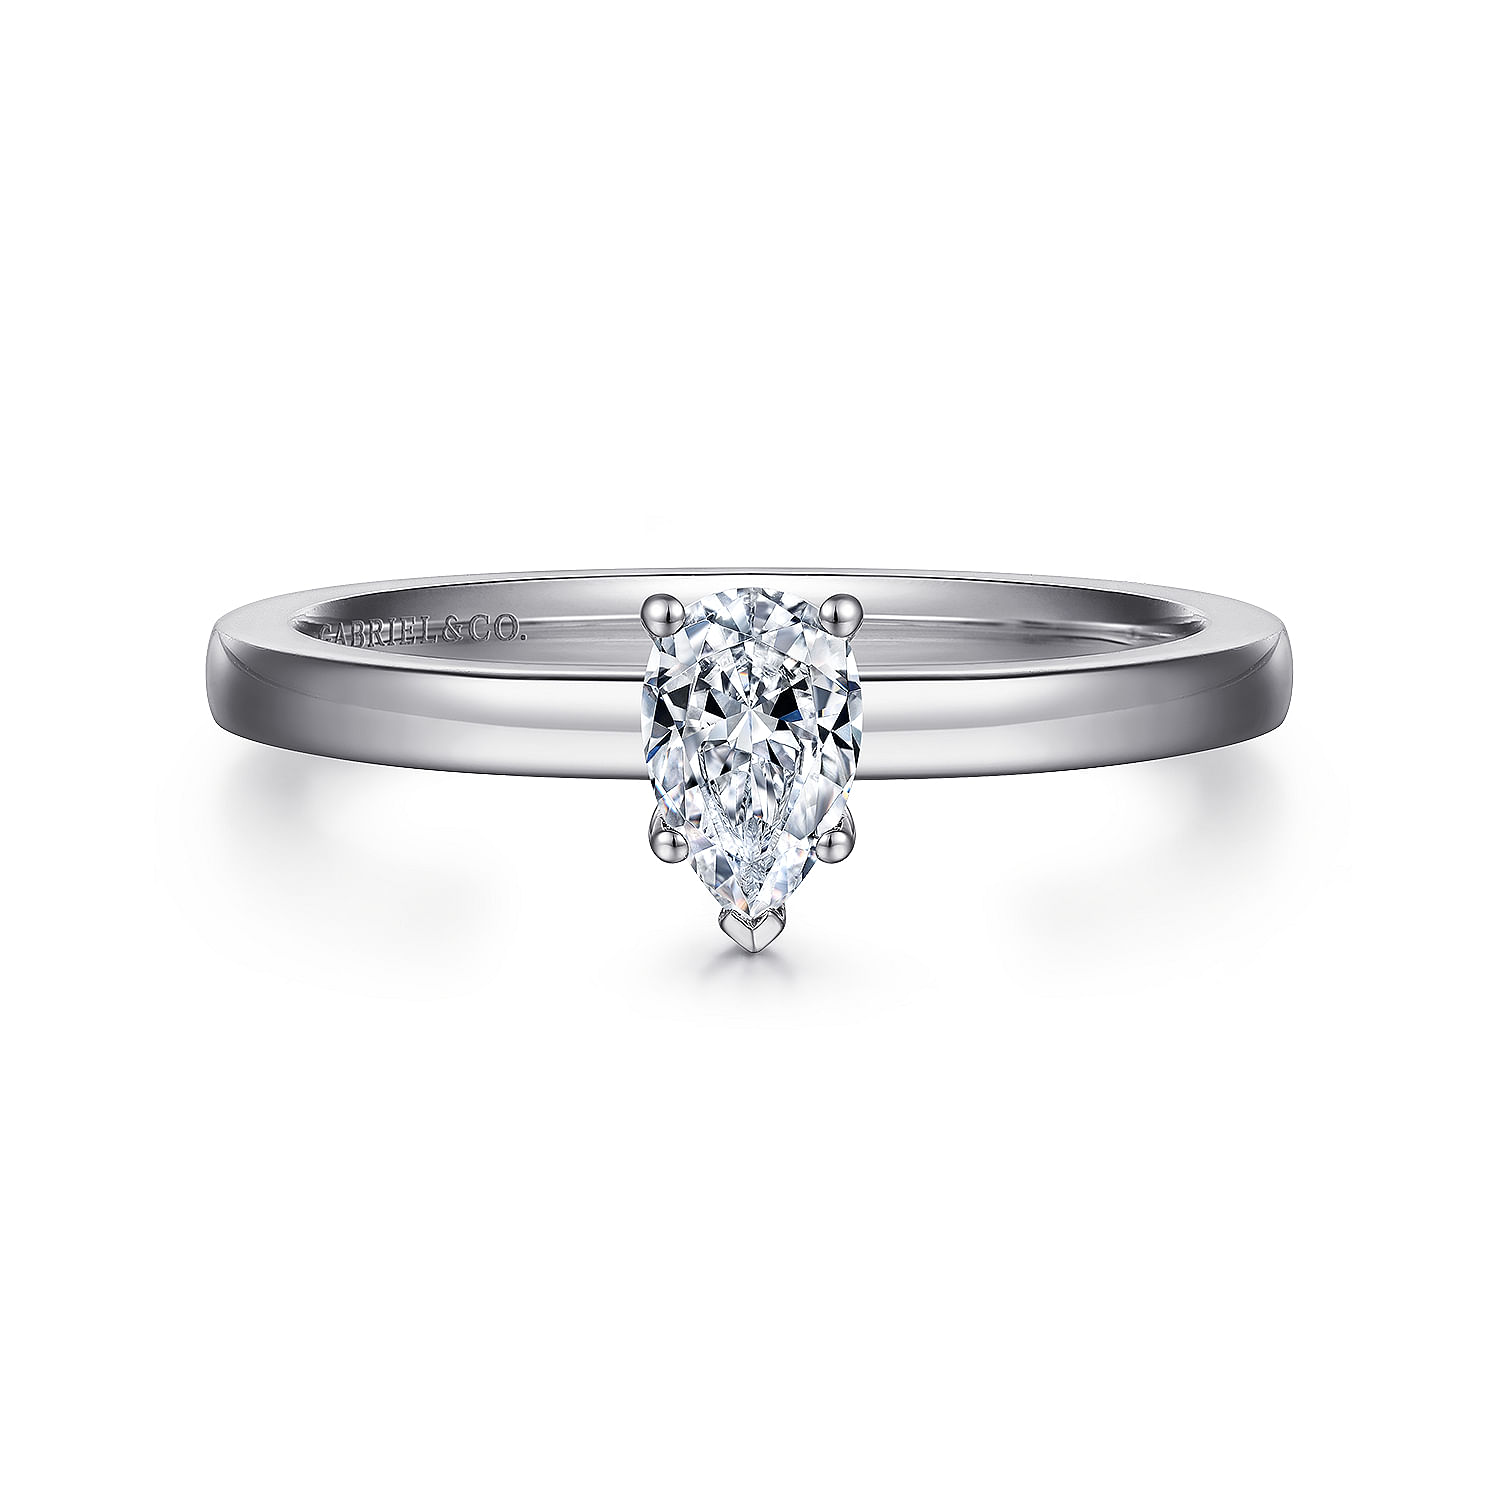 Paula - 14K White Gold Pear Shape Diamond Engagement Ring